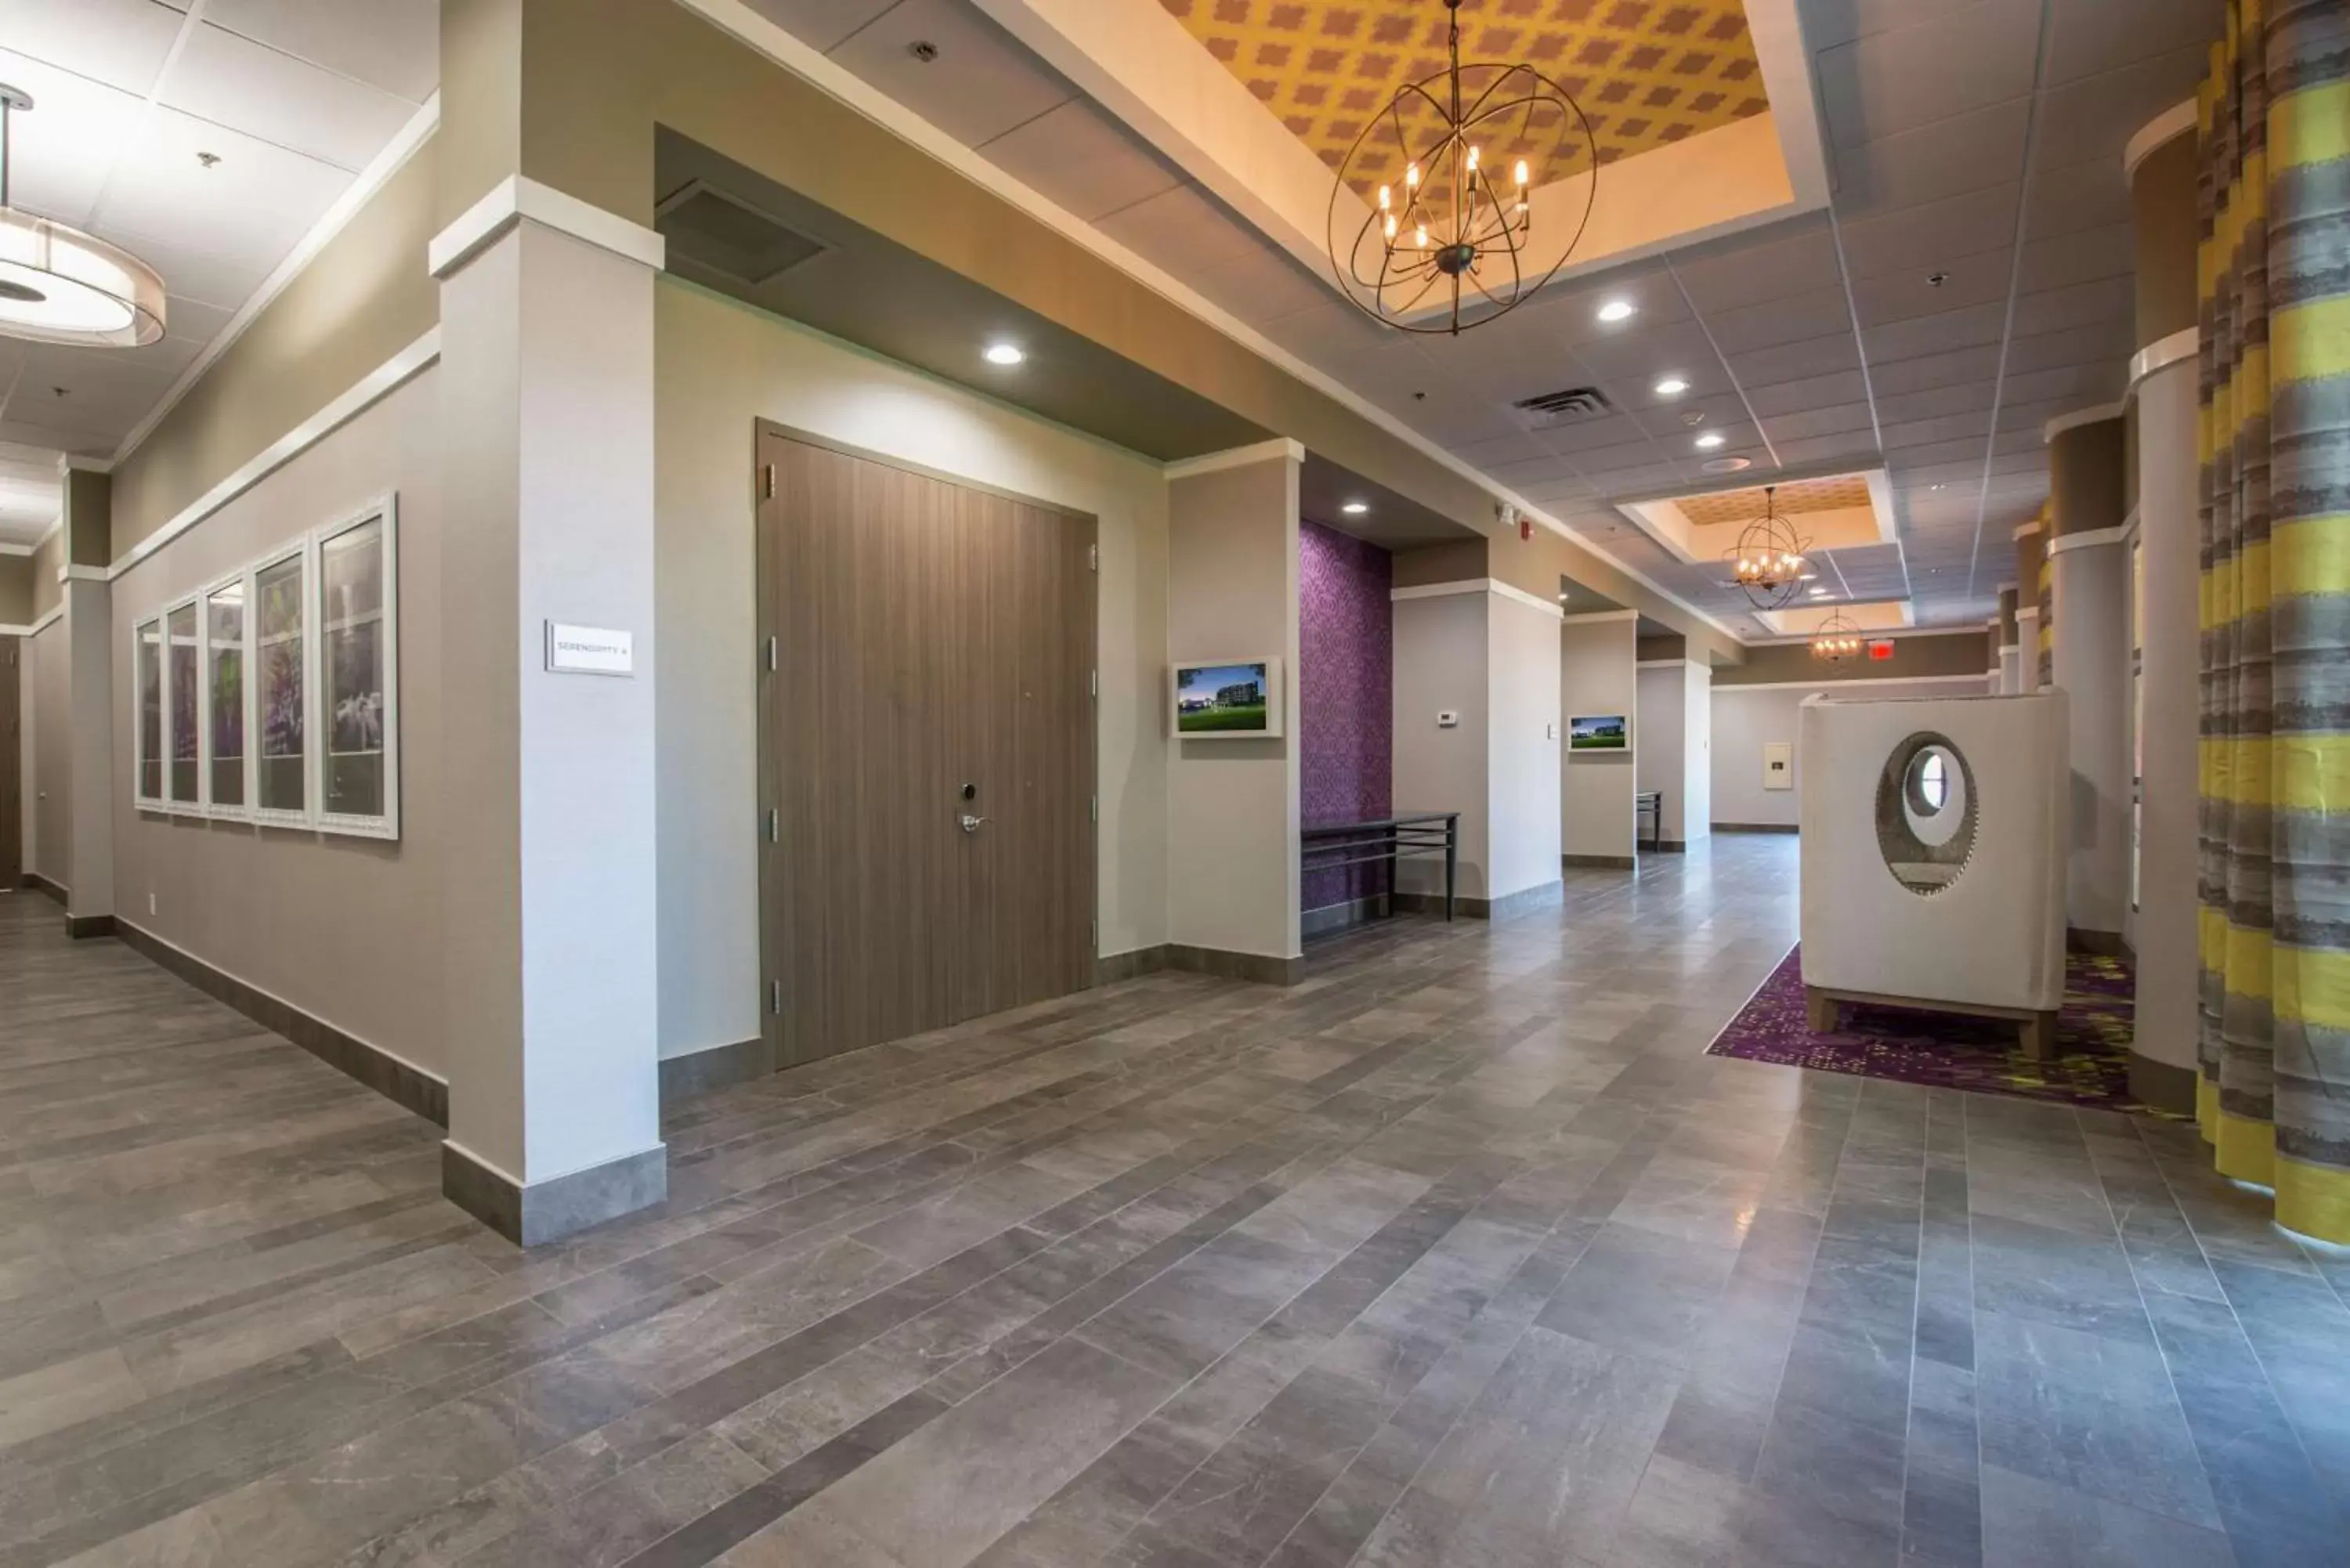 Lobby or reception in DoubleTree by Hilton Winston Salem - University, NC